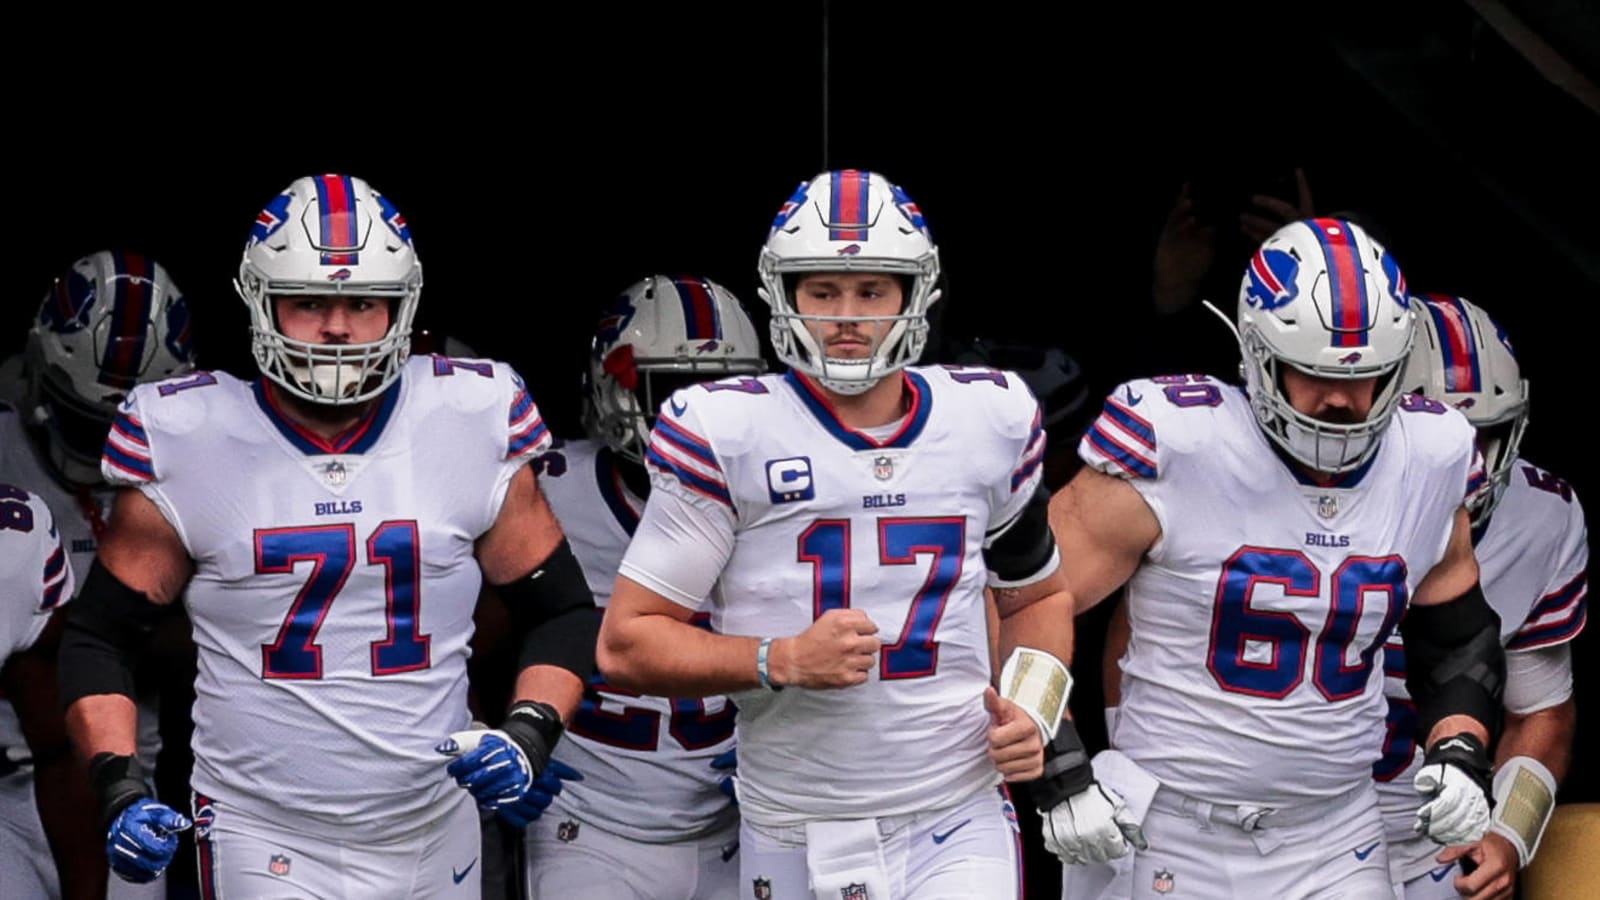 Bills get first home win vs. Patriots since 2011